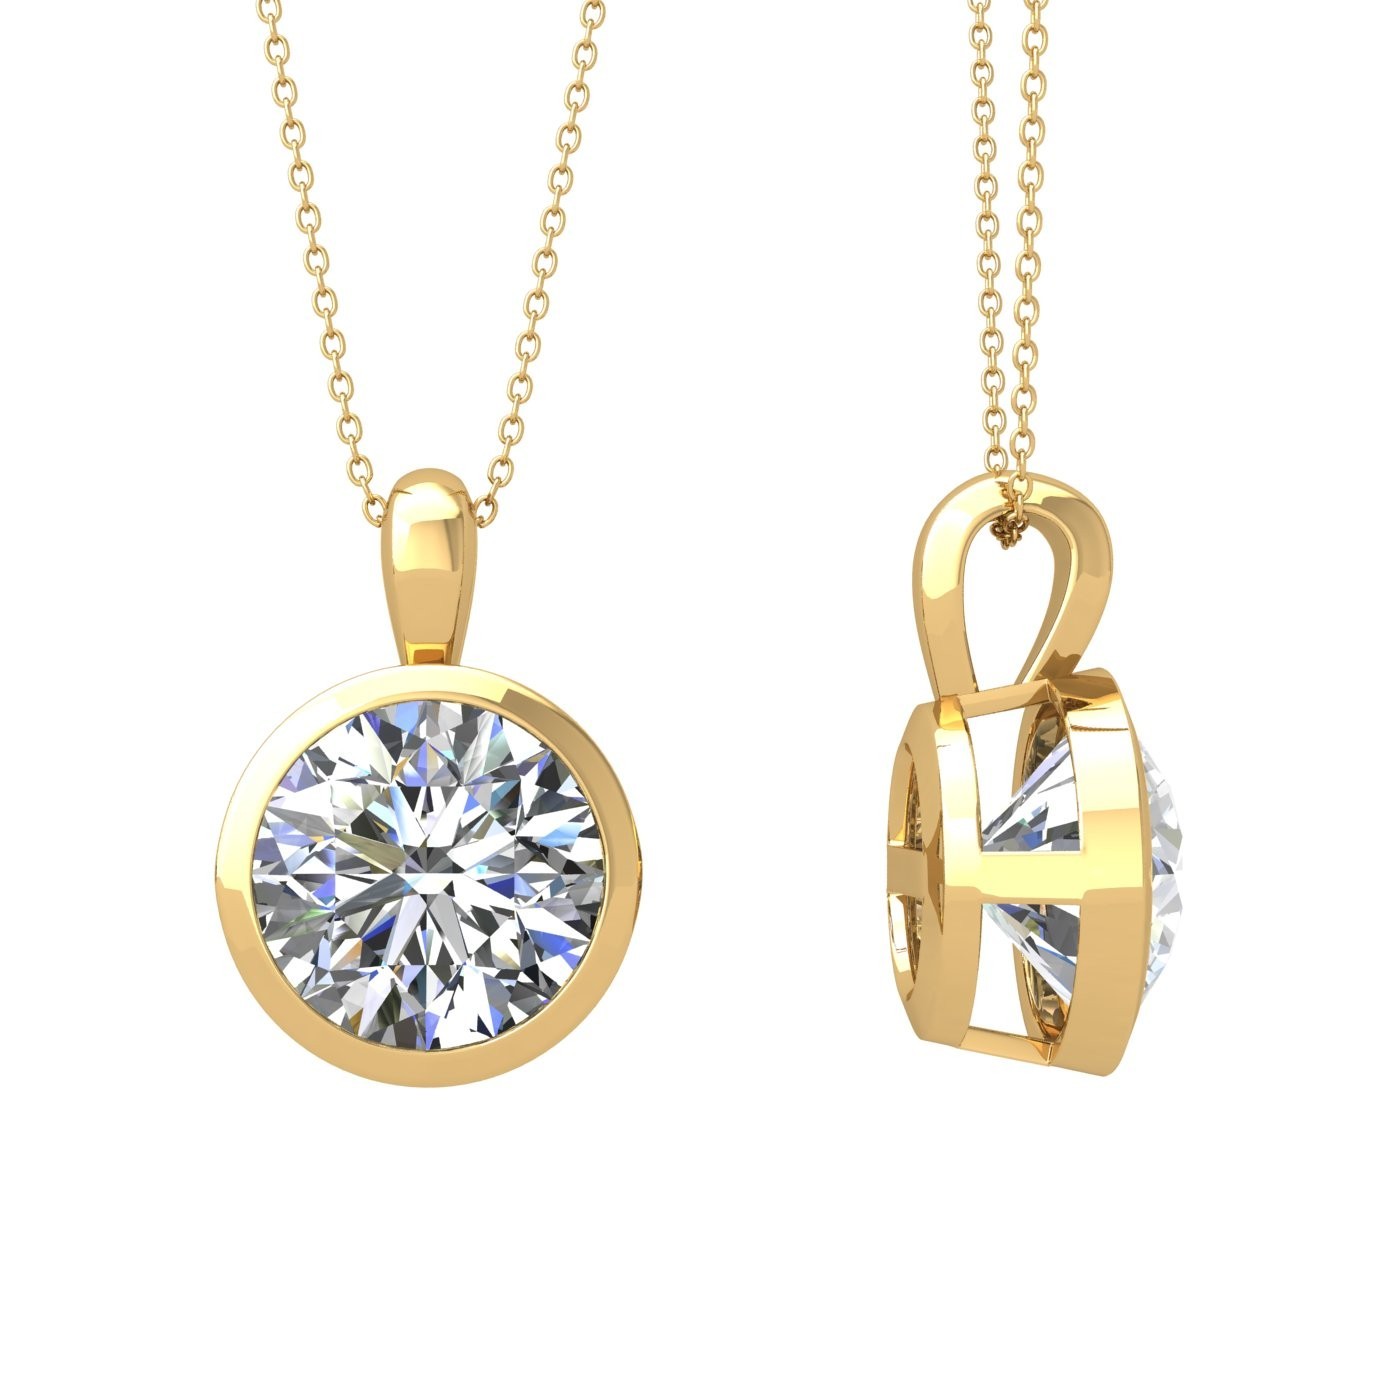 18k yellow gold 1.0 ct round shape bezel set diamond pendant